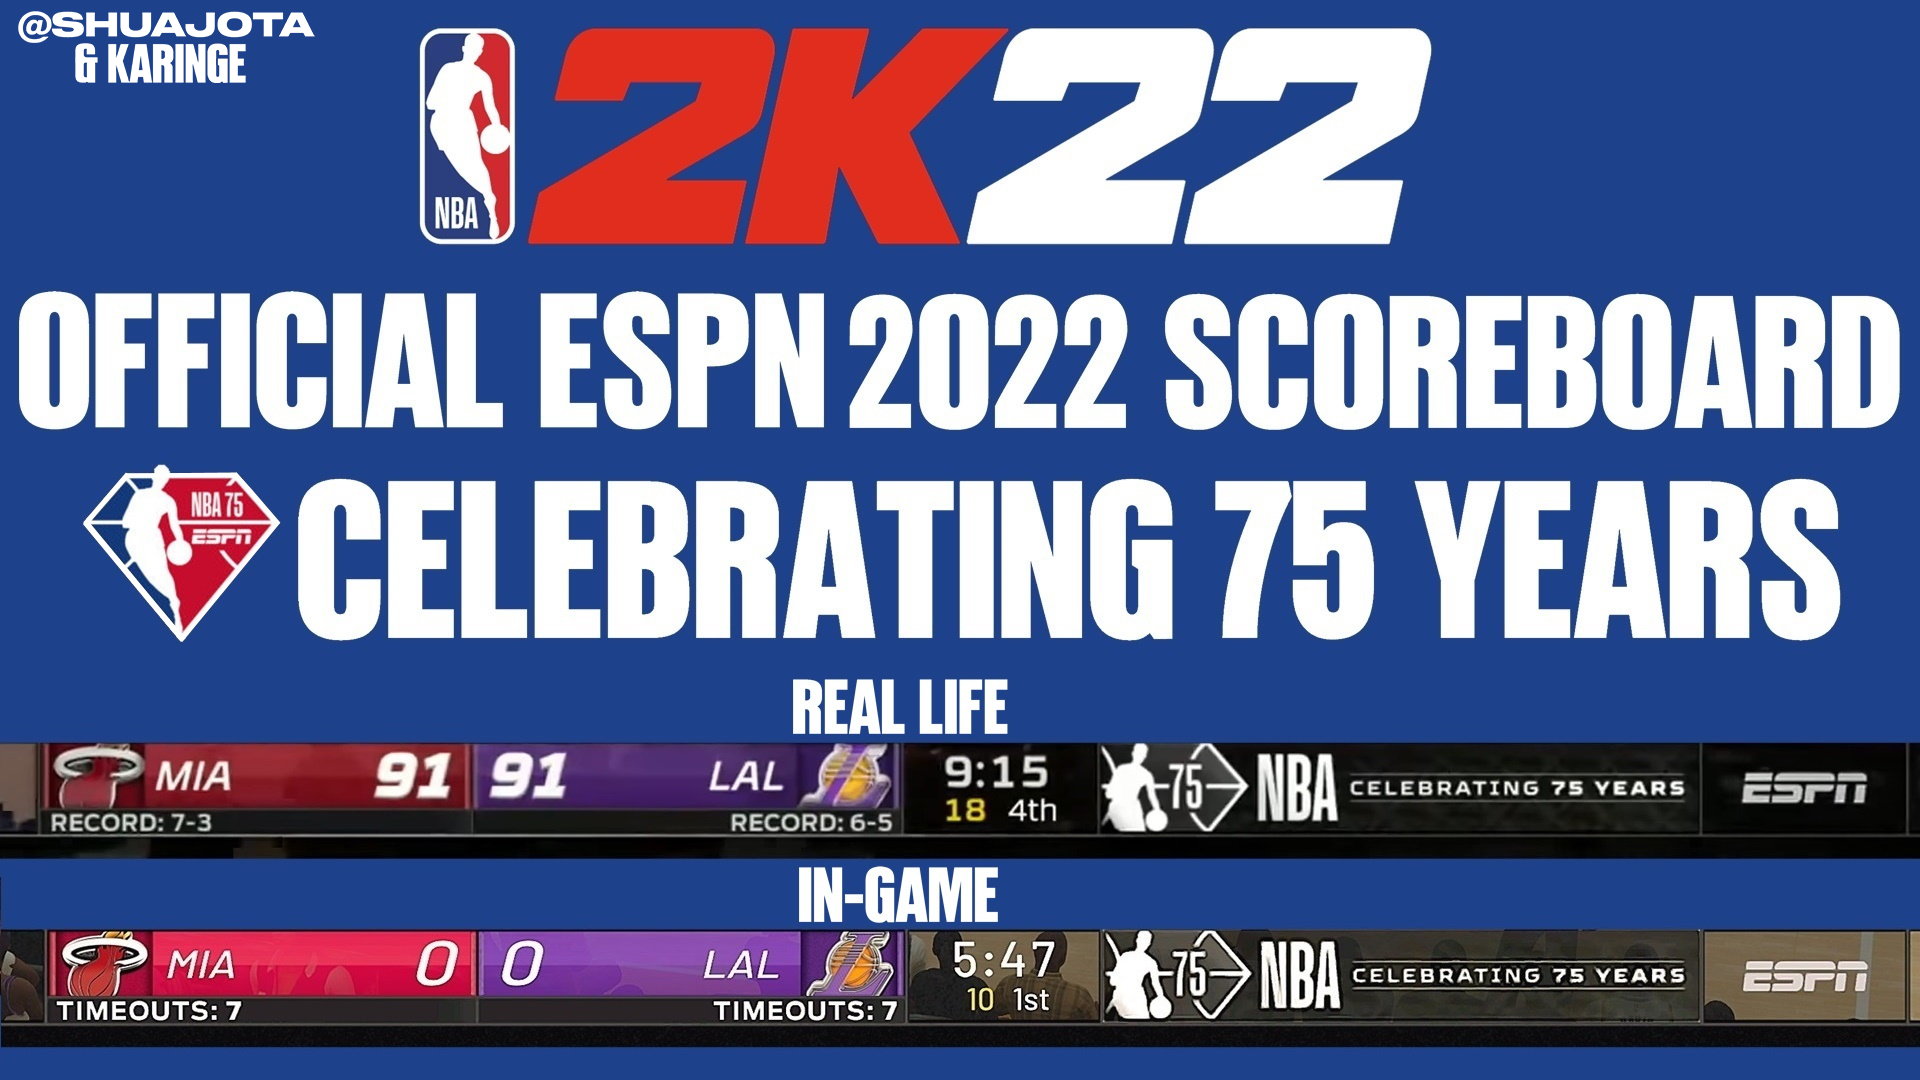 NBA 2K22 Official ESPN 2022 Scoreboard 75th Anniversary by Shuajota and Karinge